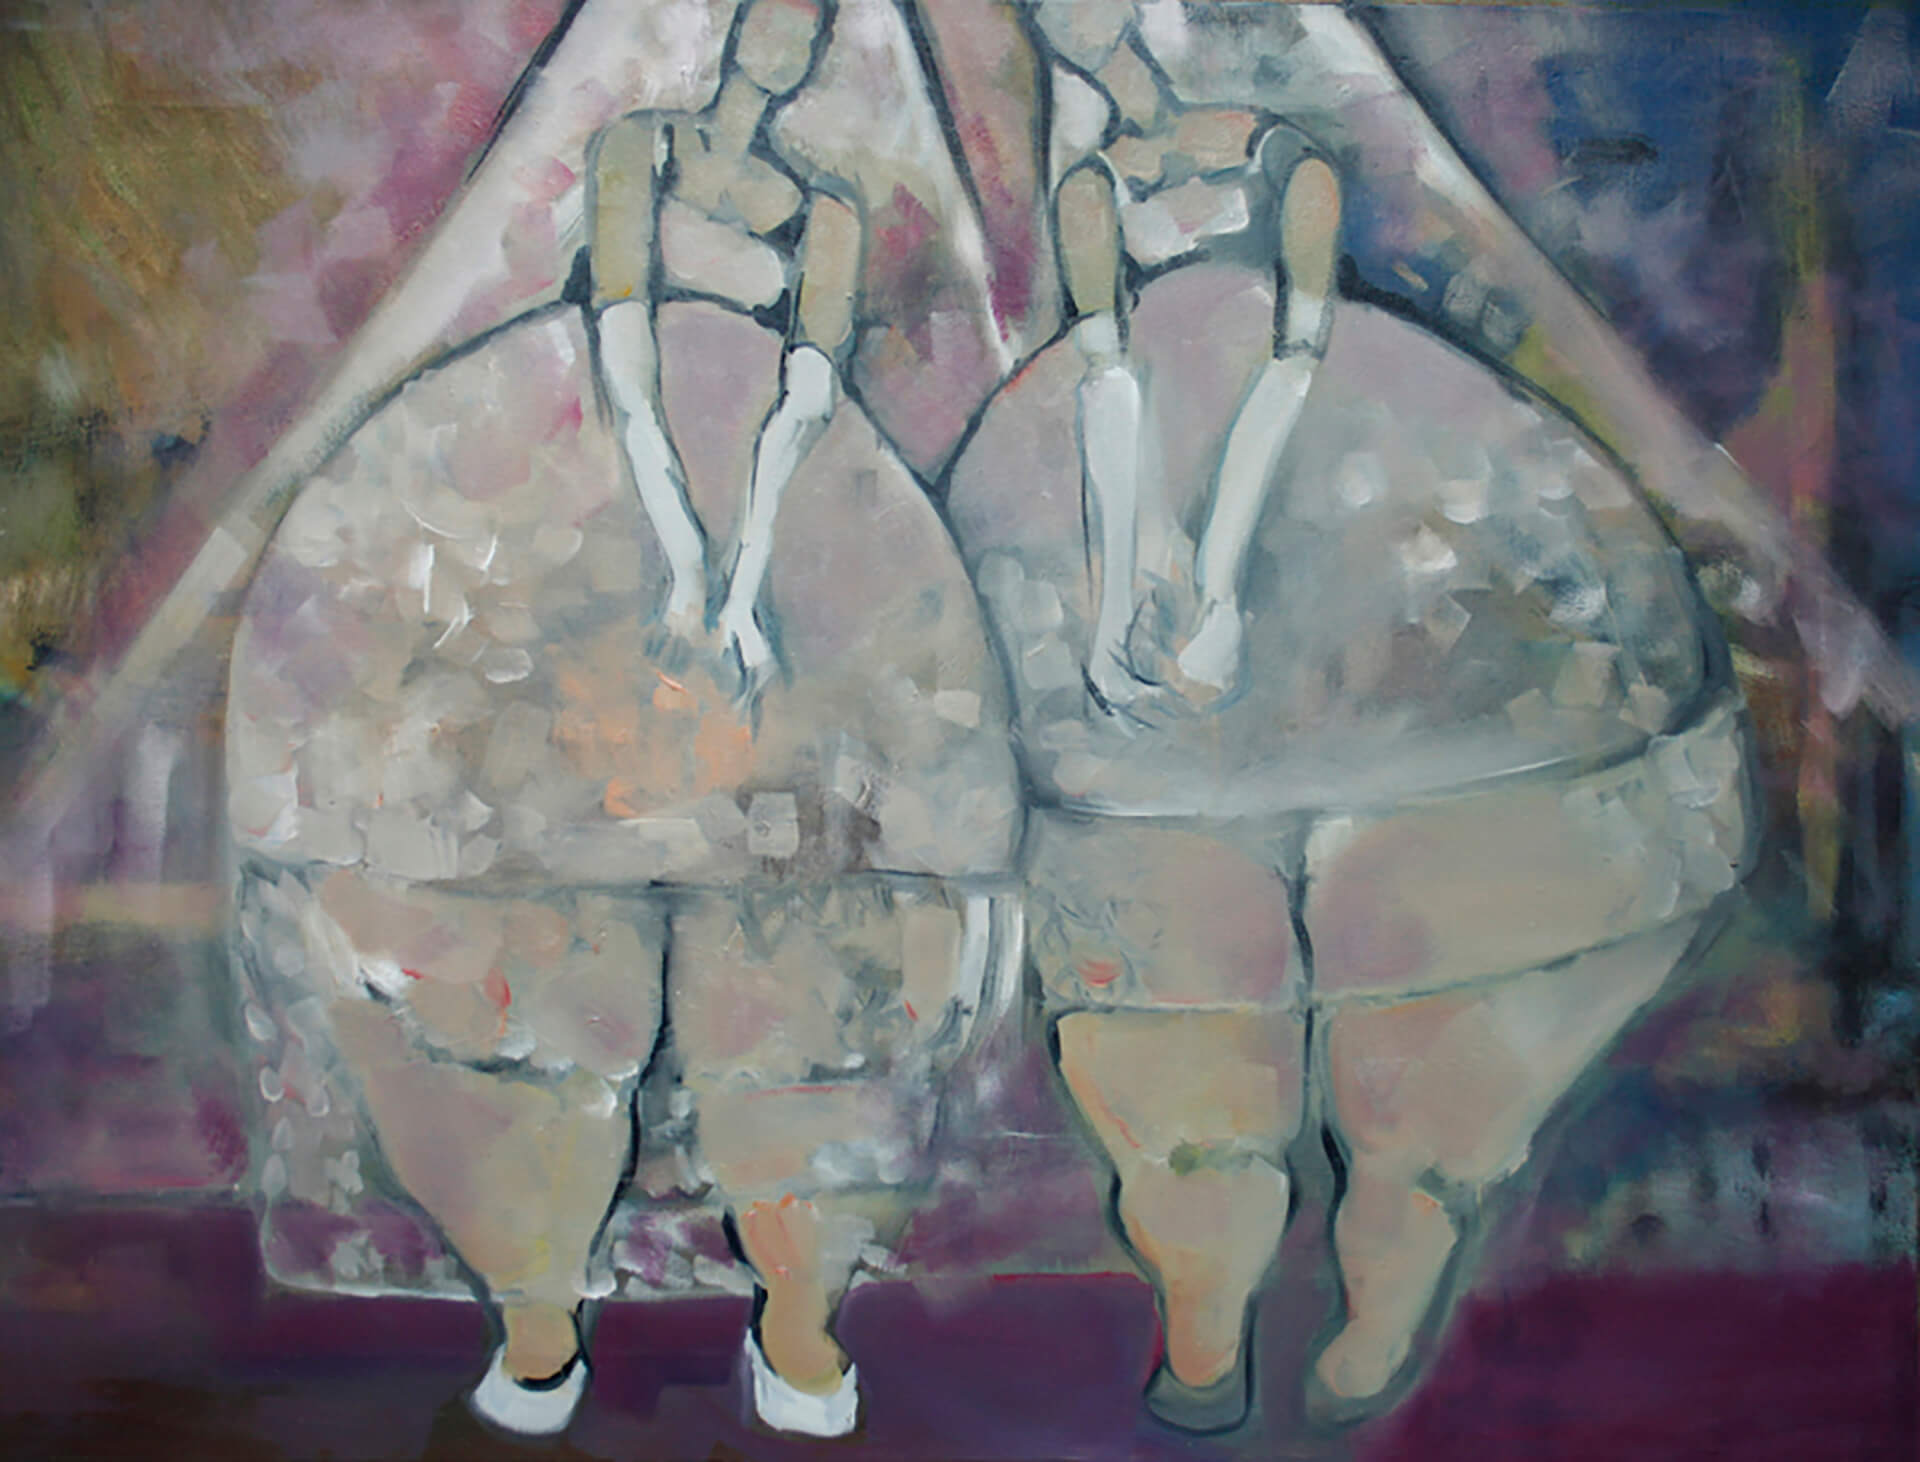 Laura & Greta. 40x60 cm. Oil on canvas. Sold